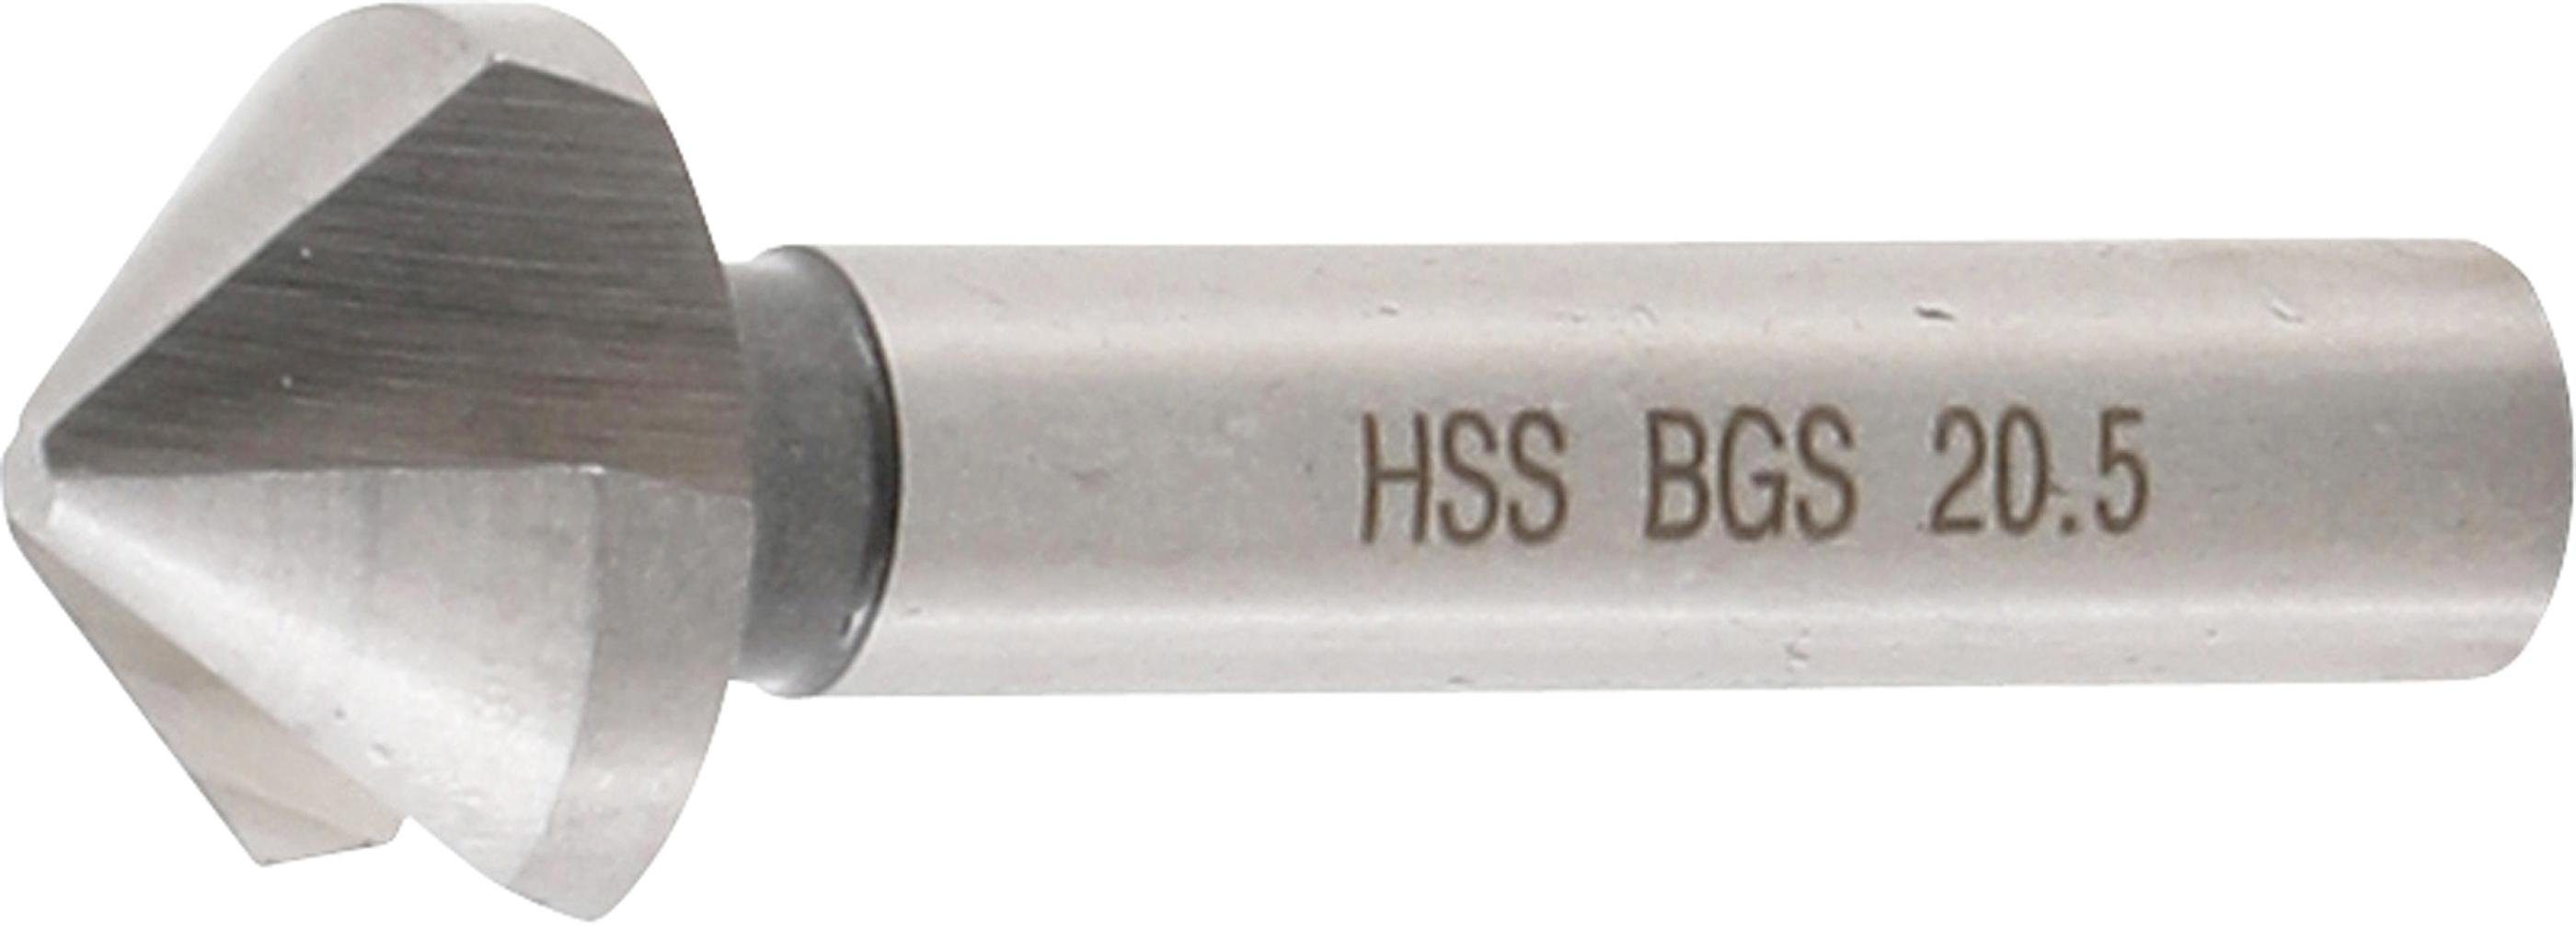 DIN BGS Stufenbohrer C, 335 mm HSS, Form 20,5 Kegelsenker, technic Ø